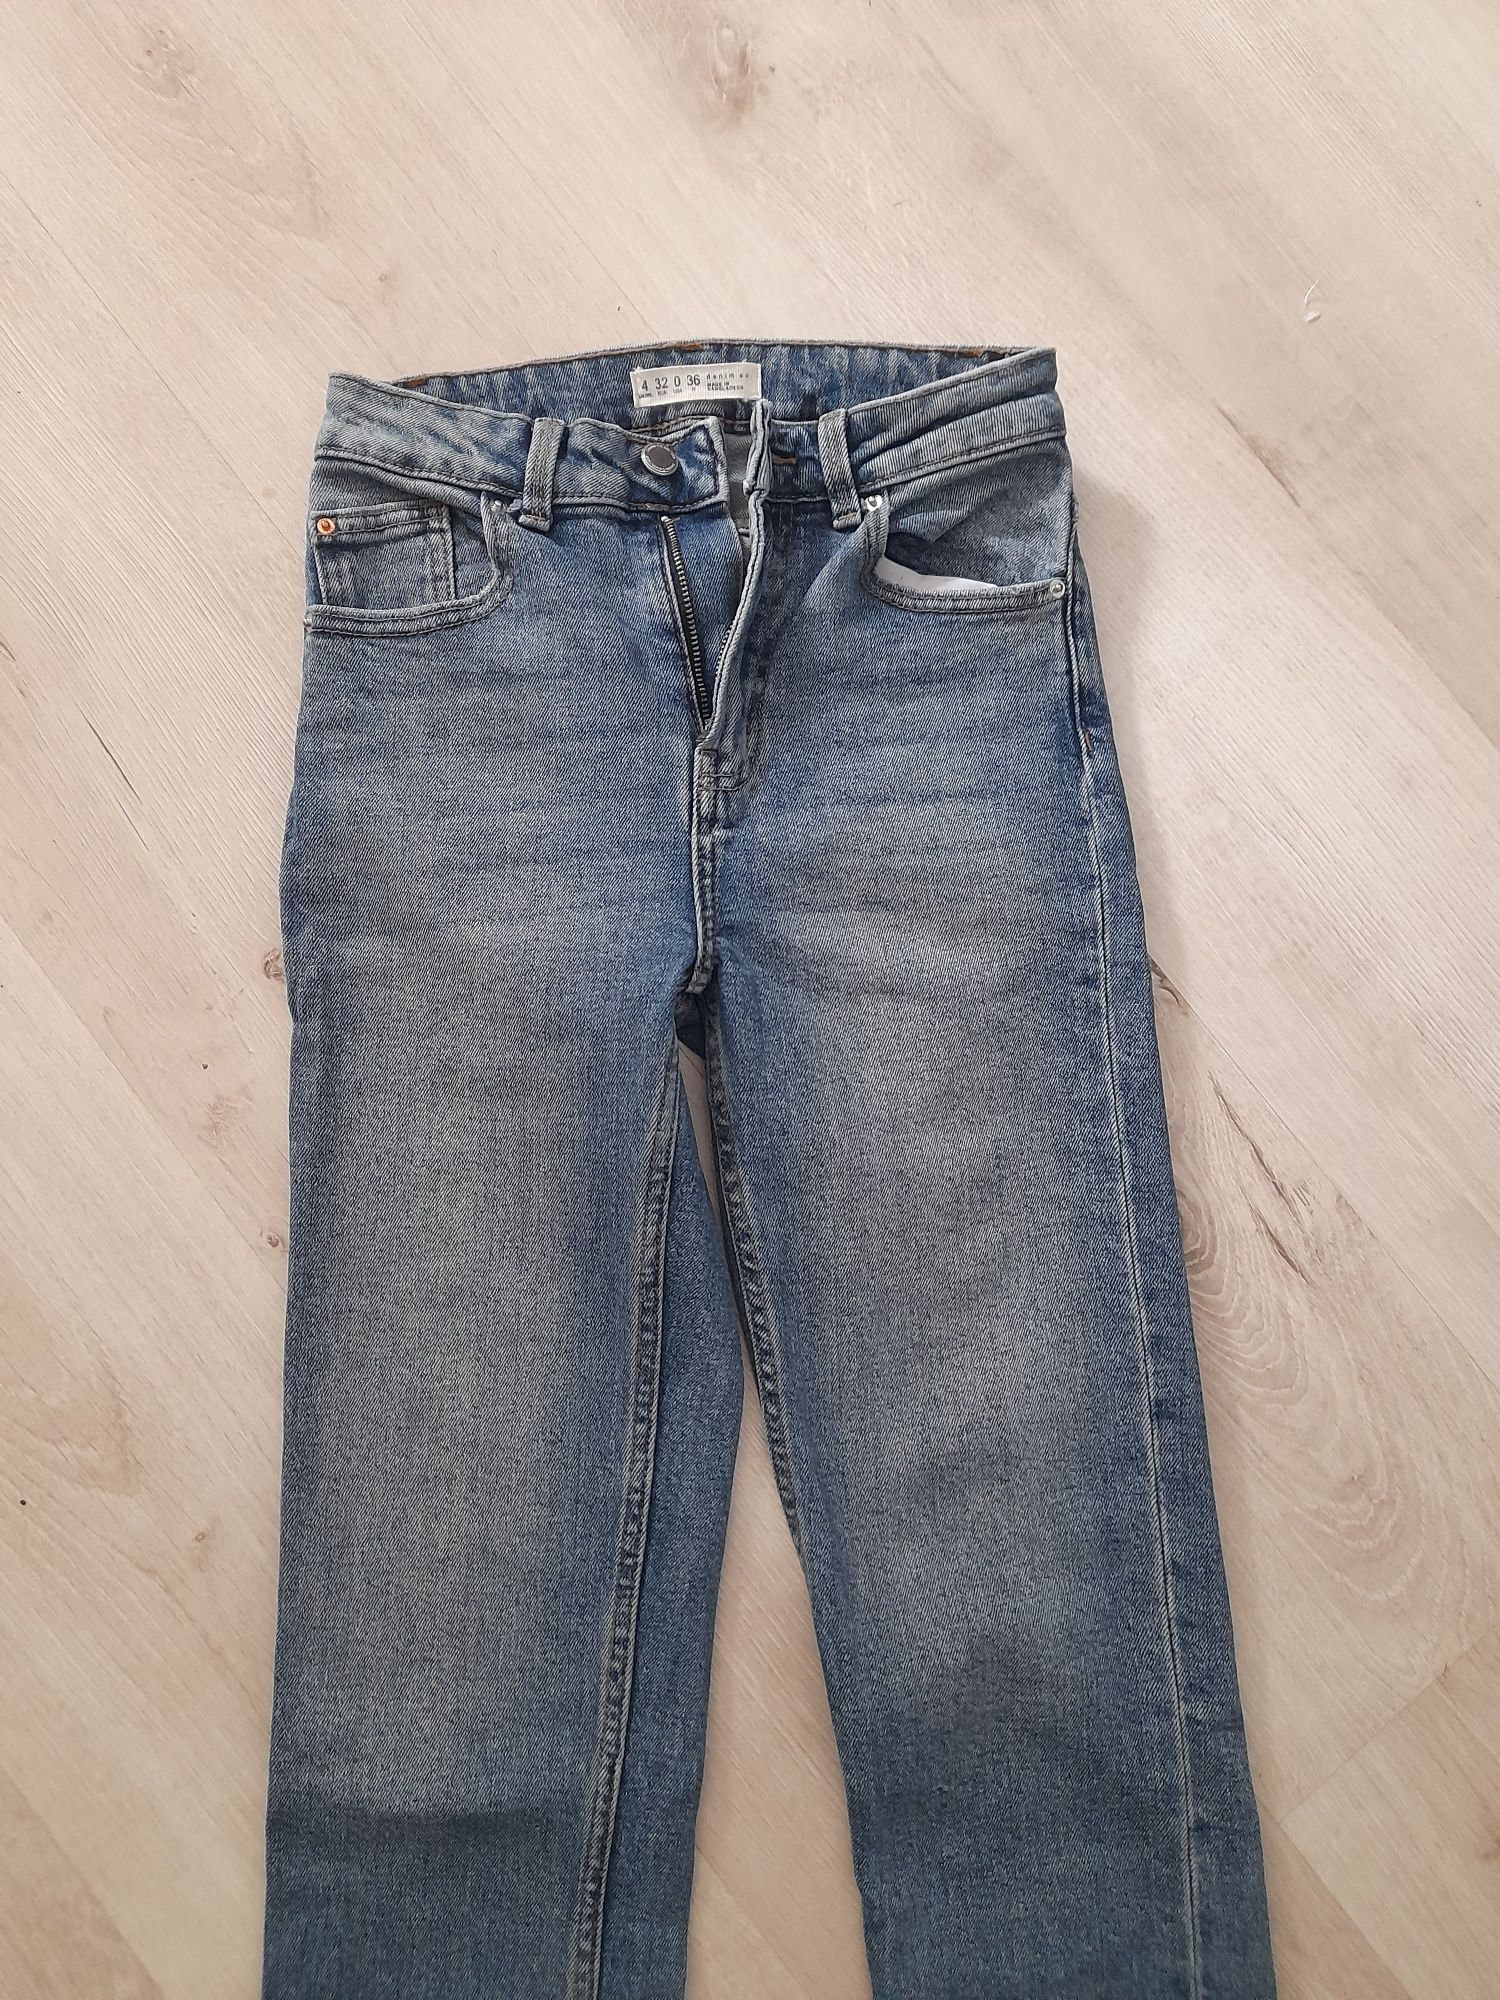 jeansy skinny denim co rozmiar 32